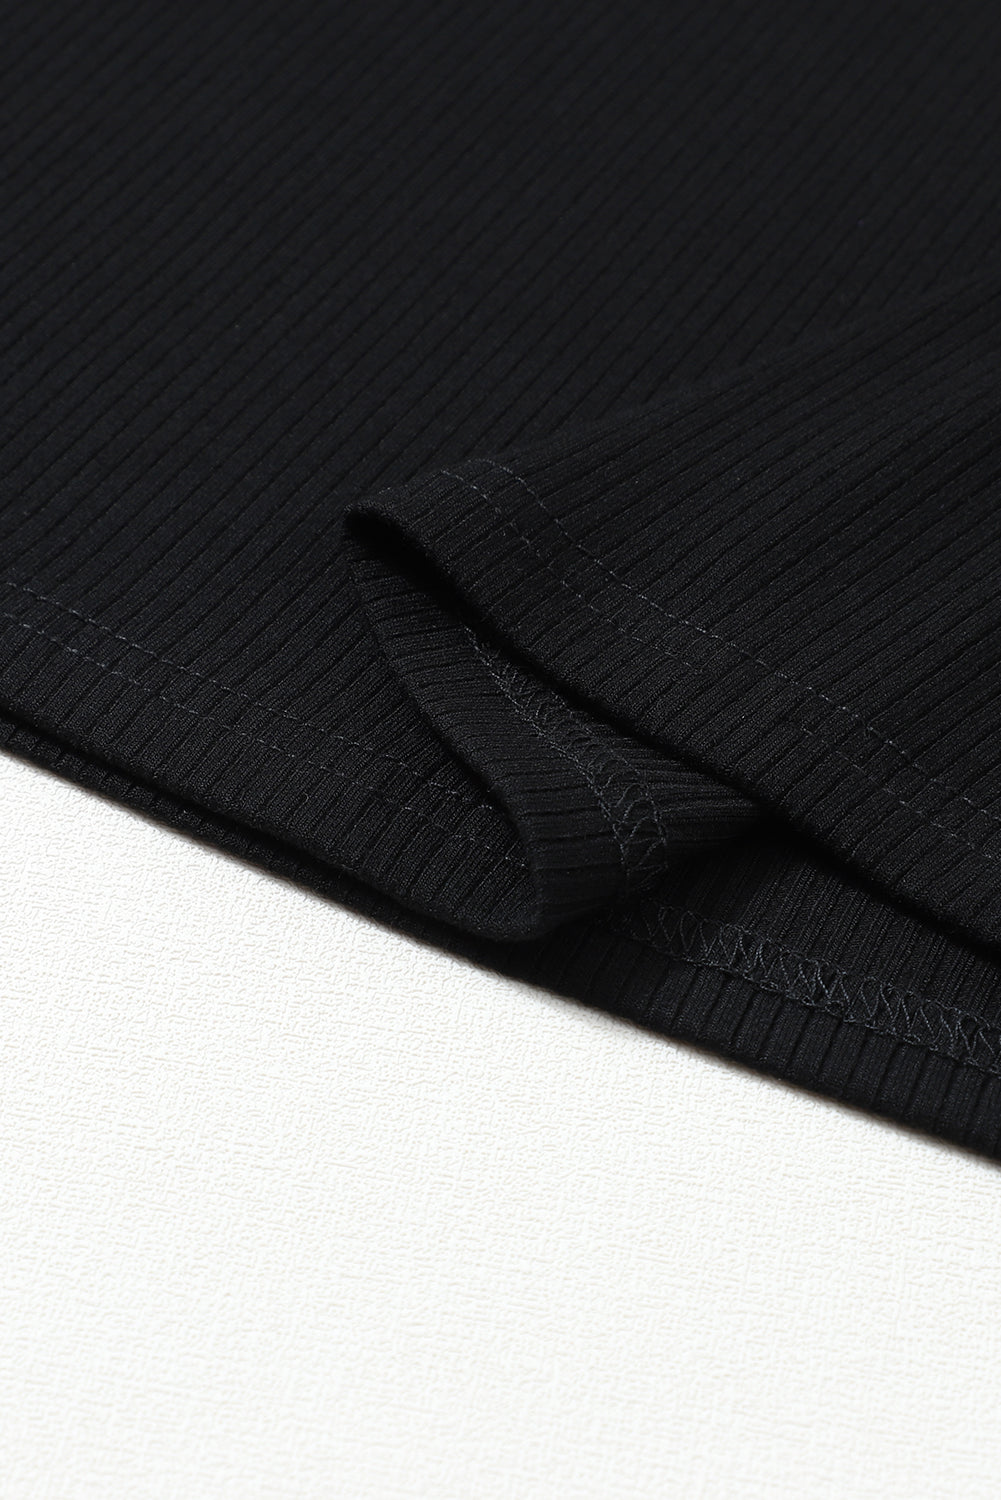 Black Leopard Print Long Sleeve Ribbed Knit Blouse-24